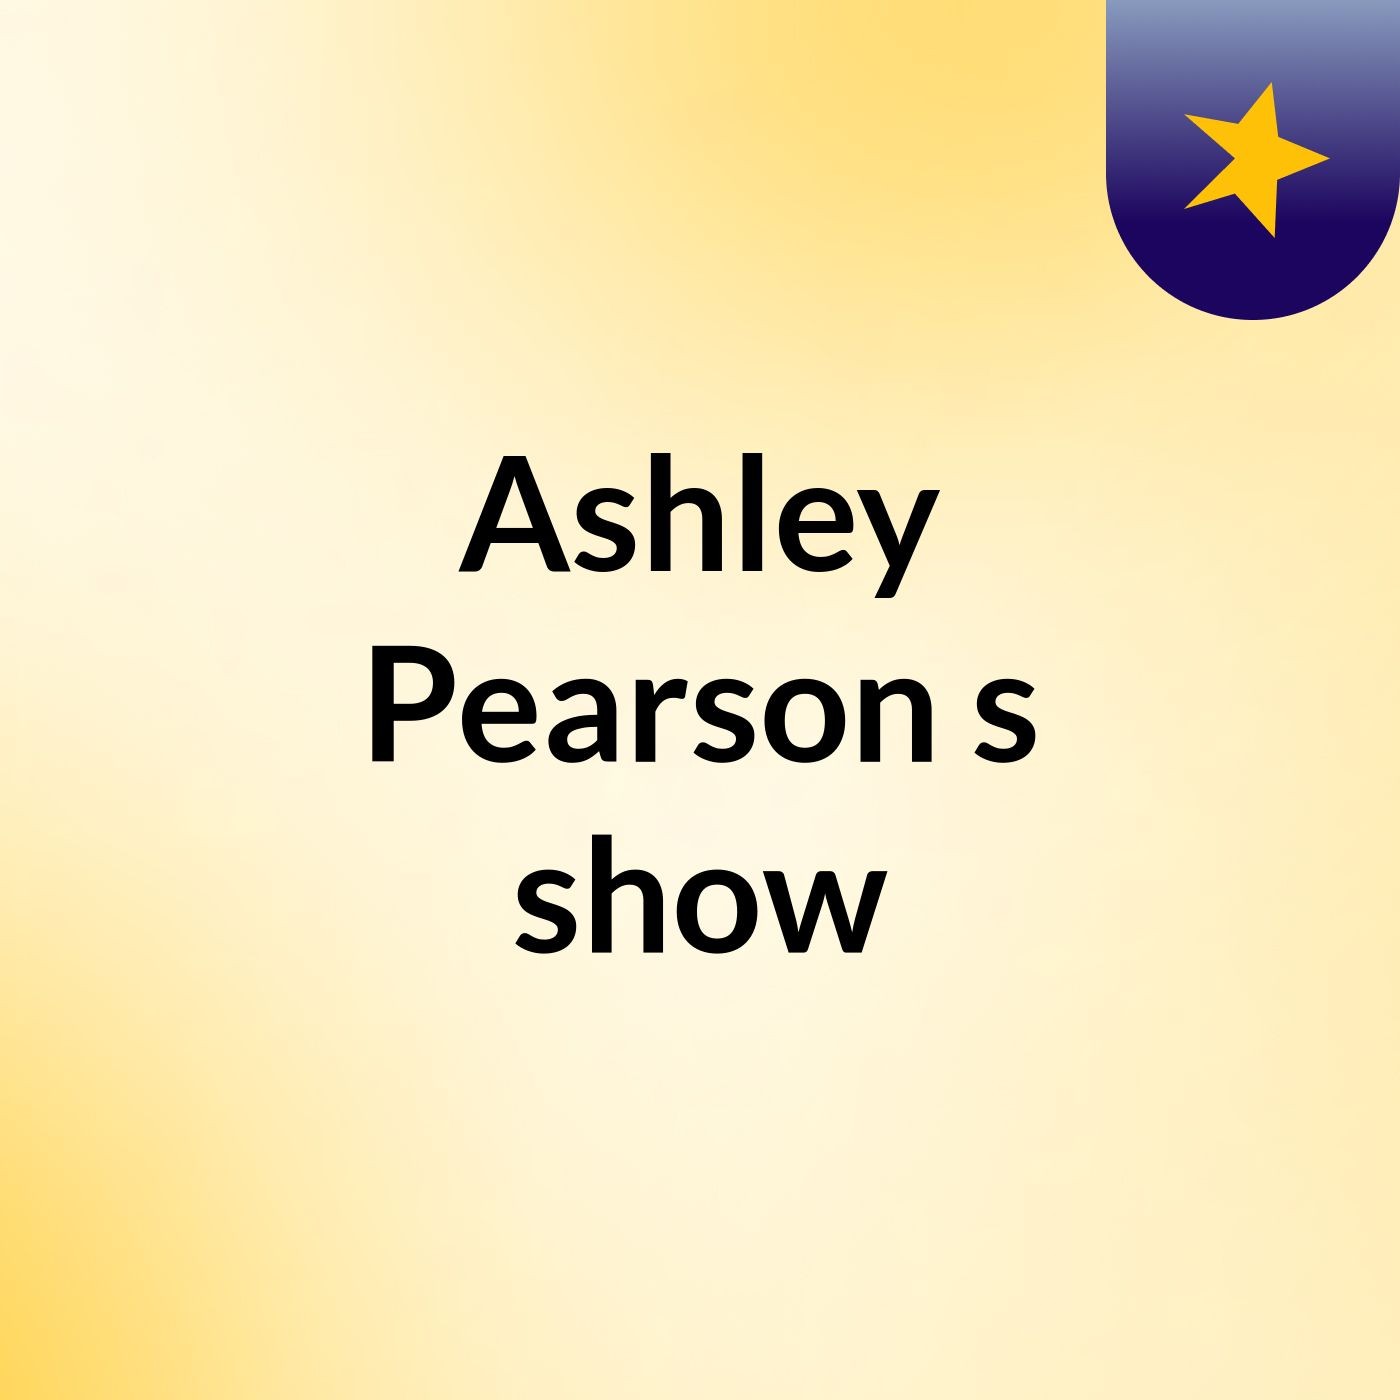 Ashley Pearson's show